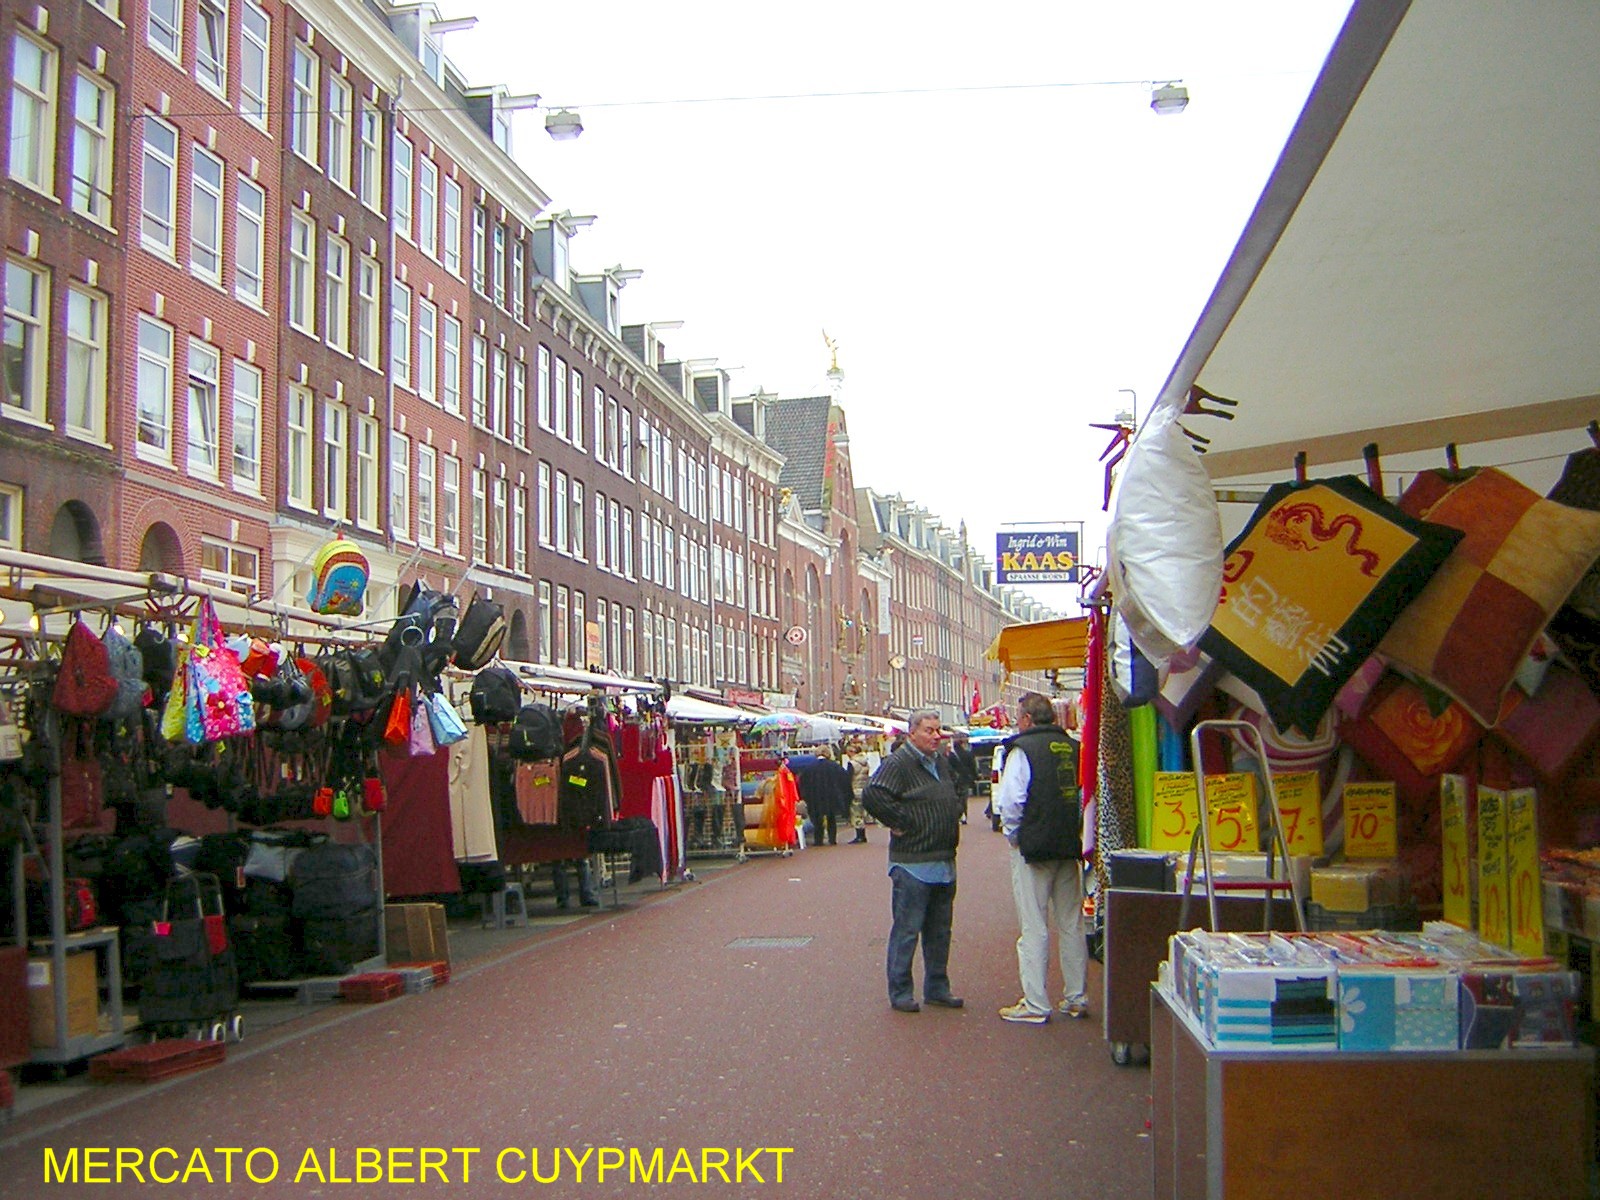 Strada di Albert Cuyp Markt - Clicca sull'immagine per ingrandirla